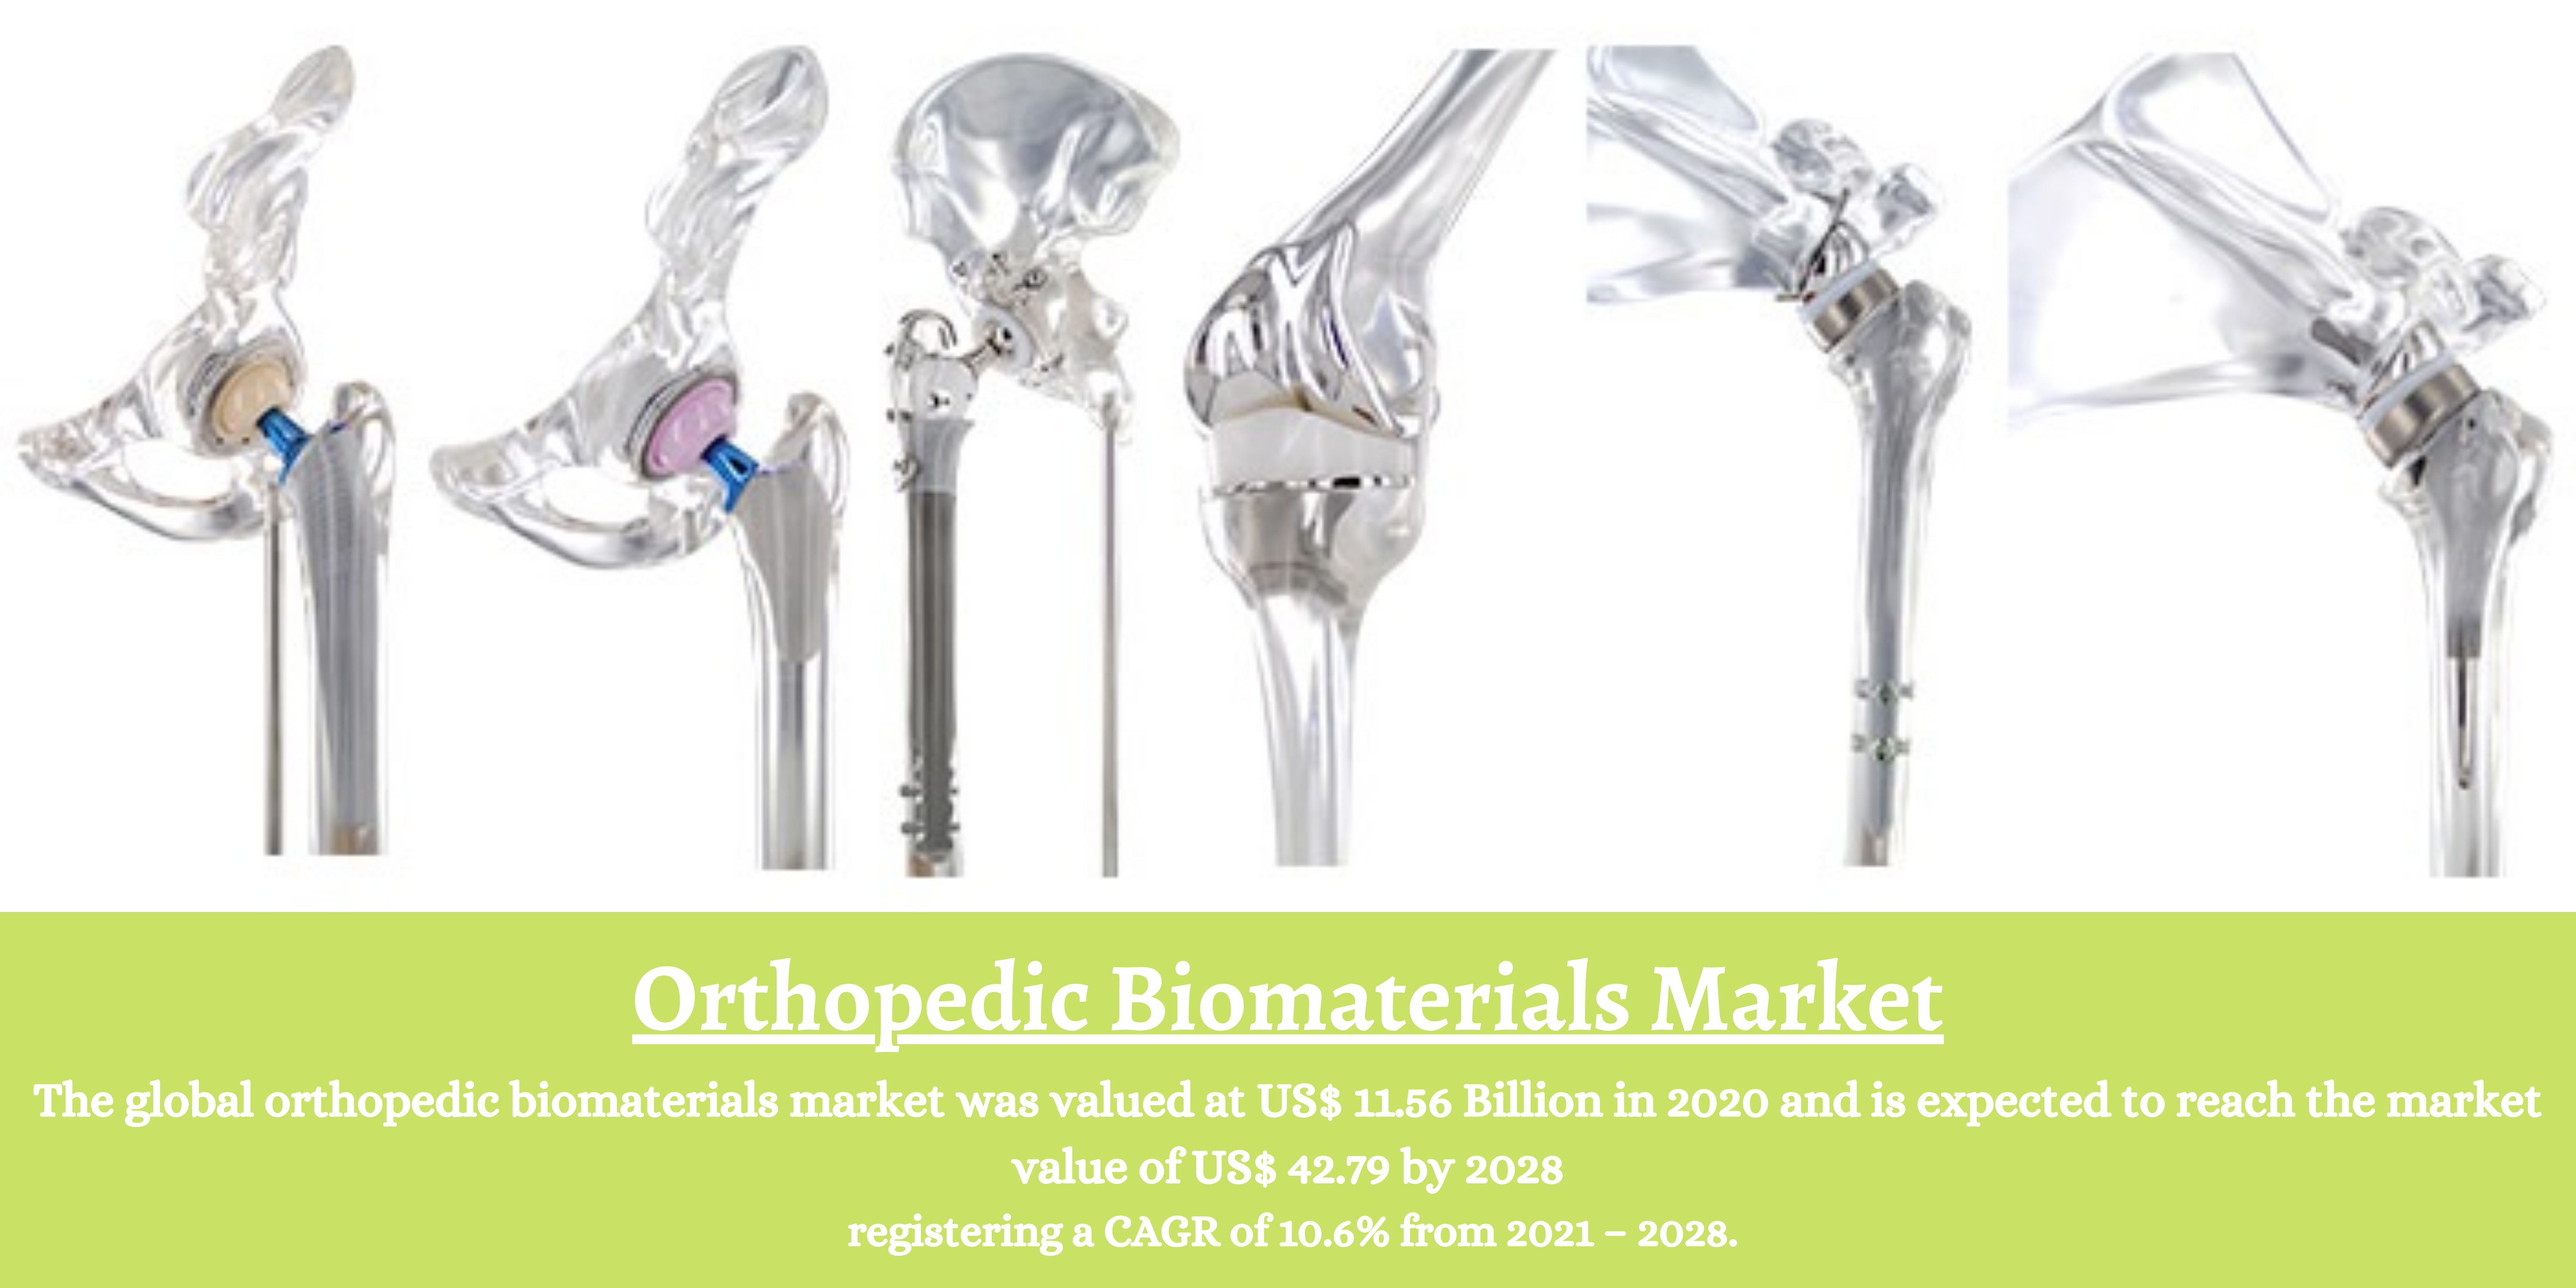 Orthopedic Biomaterials Market 